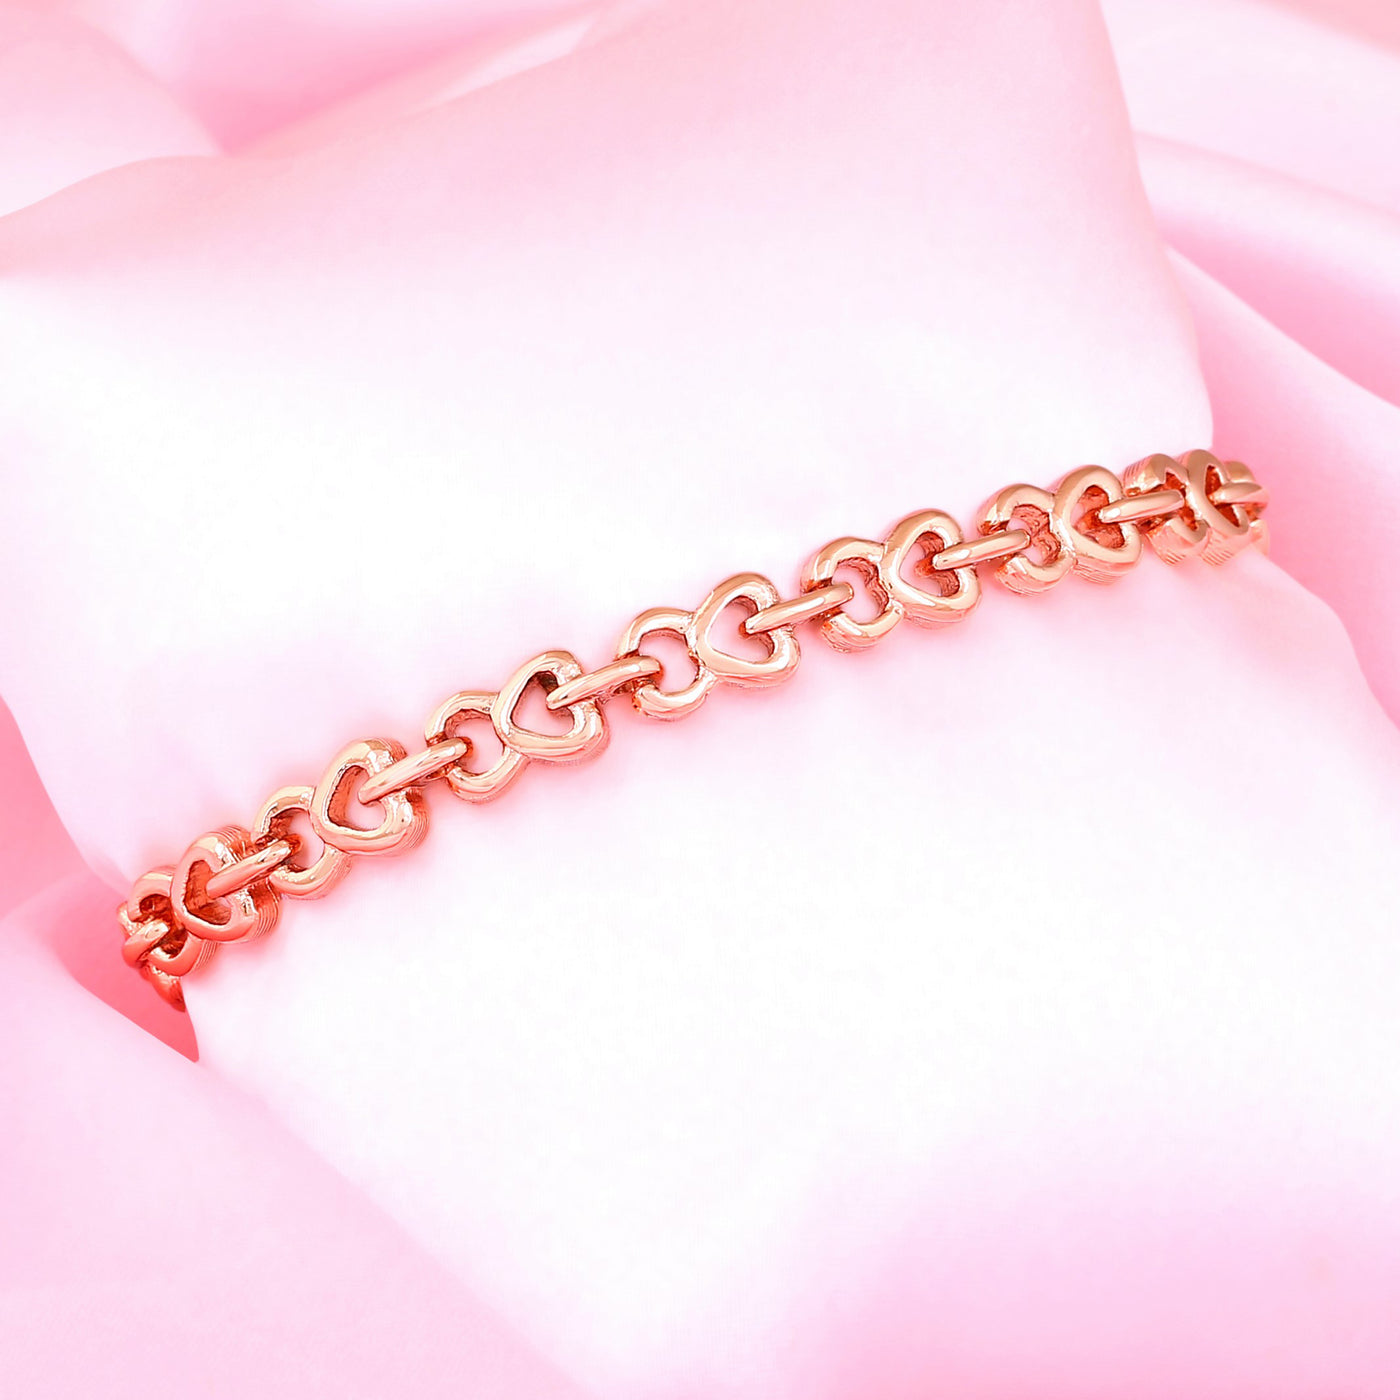 Estele Rose Gold Plated See-Saw Tennis Bracelet for Women